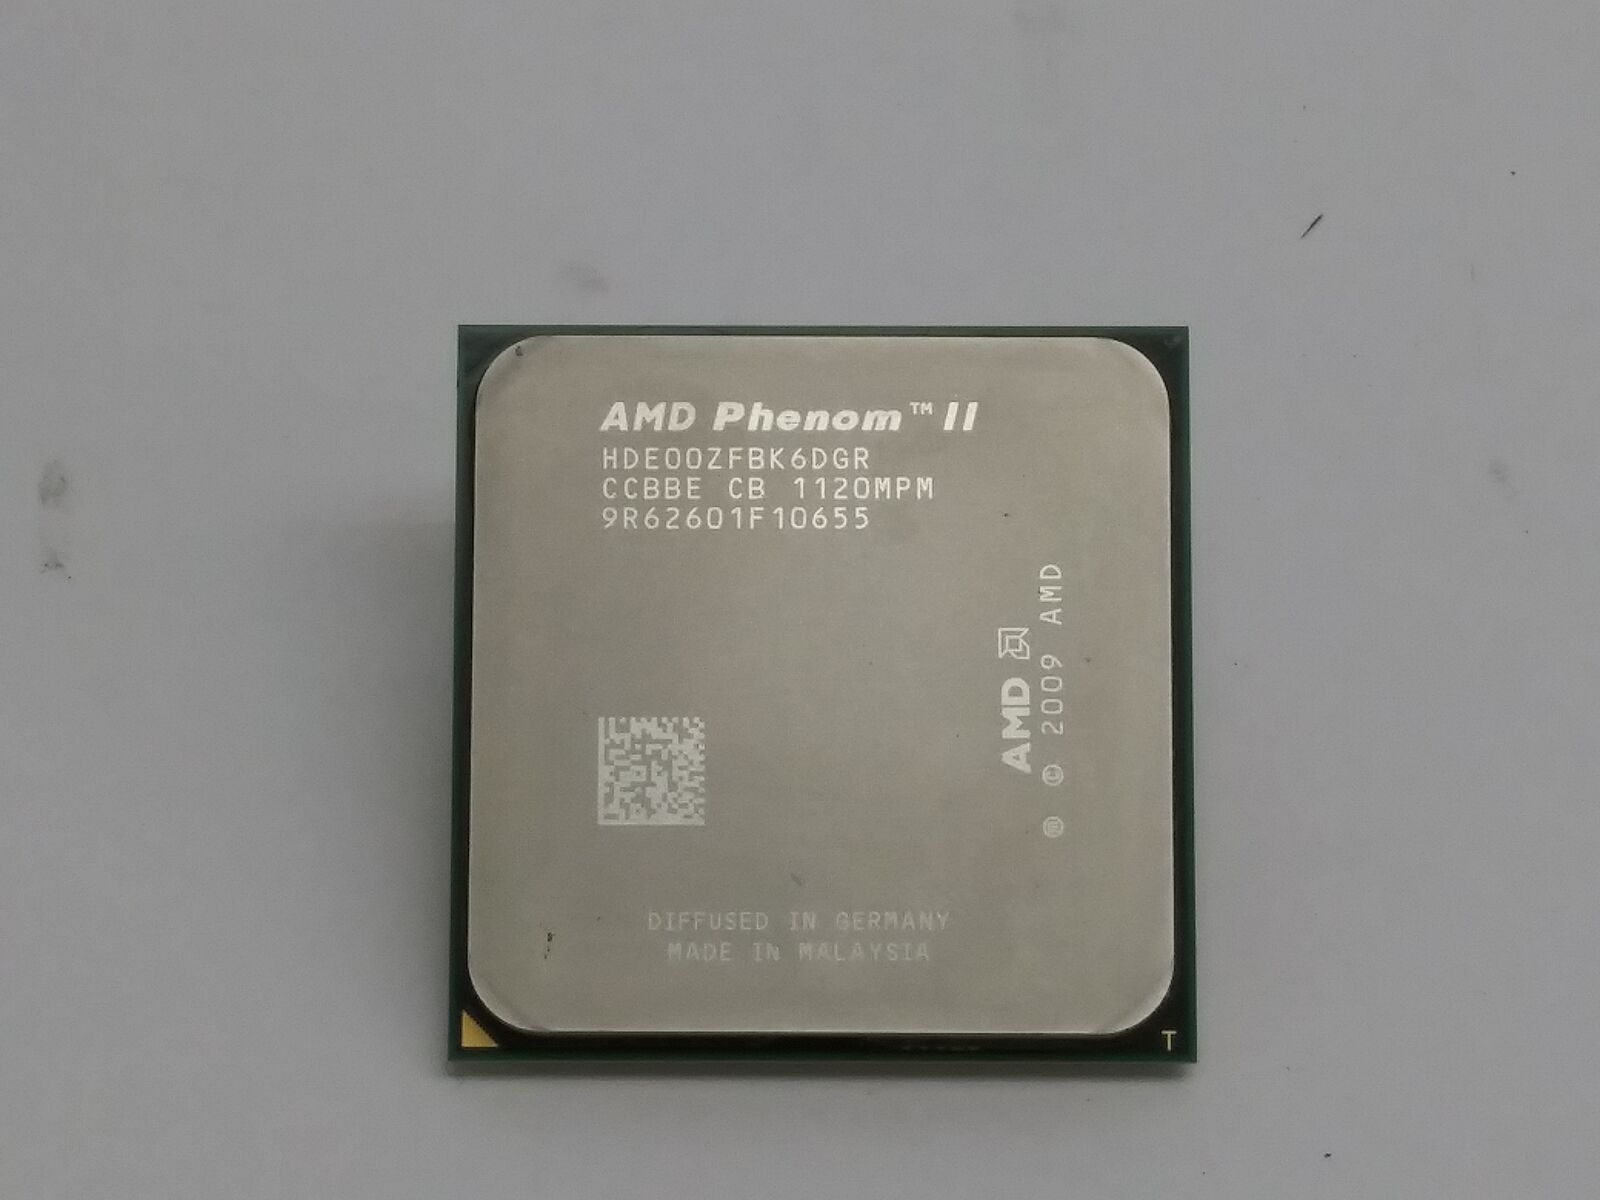 AMD Phenom II X6 1100T 3.30 GHz Socket AM3 CPU Processor HDE00ZFBK6DGR